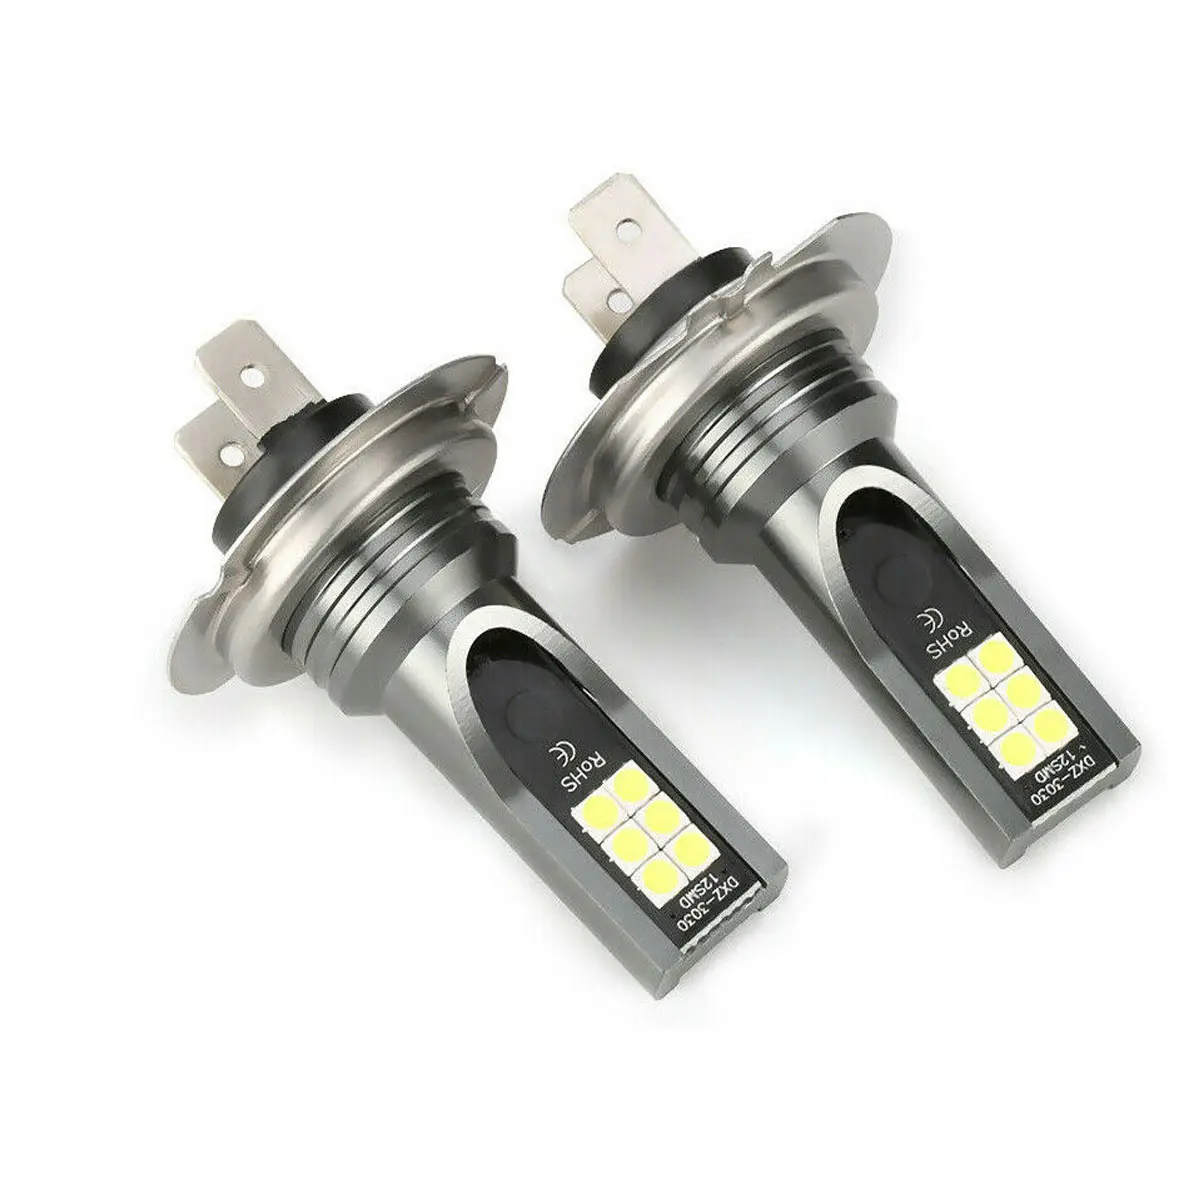 Car LED Headlight H7 Kits Driving DRL Lamp Daytime Running Fog Lights 110W 20000LM FOG Light Bulbs 6000K